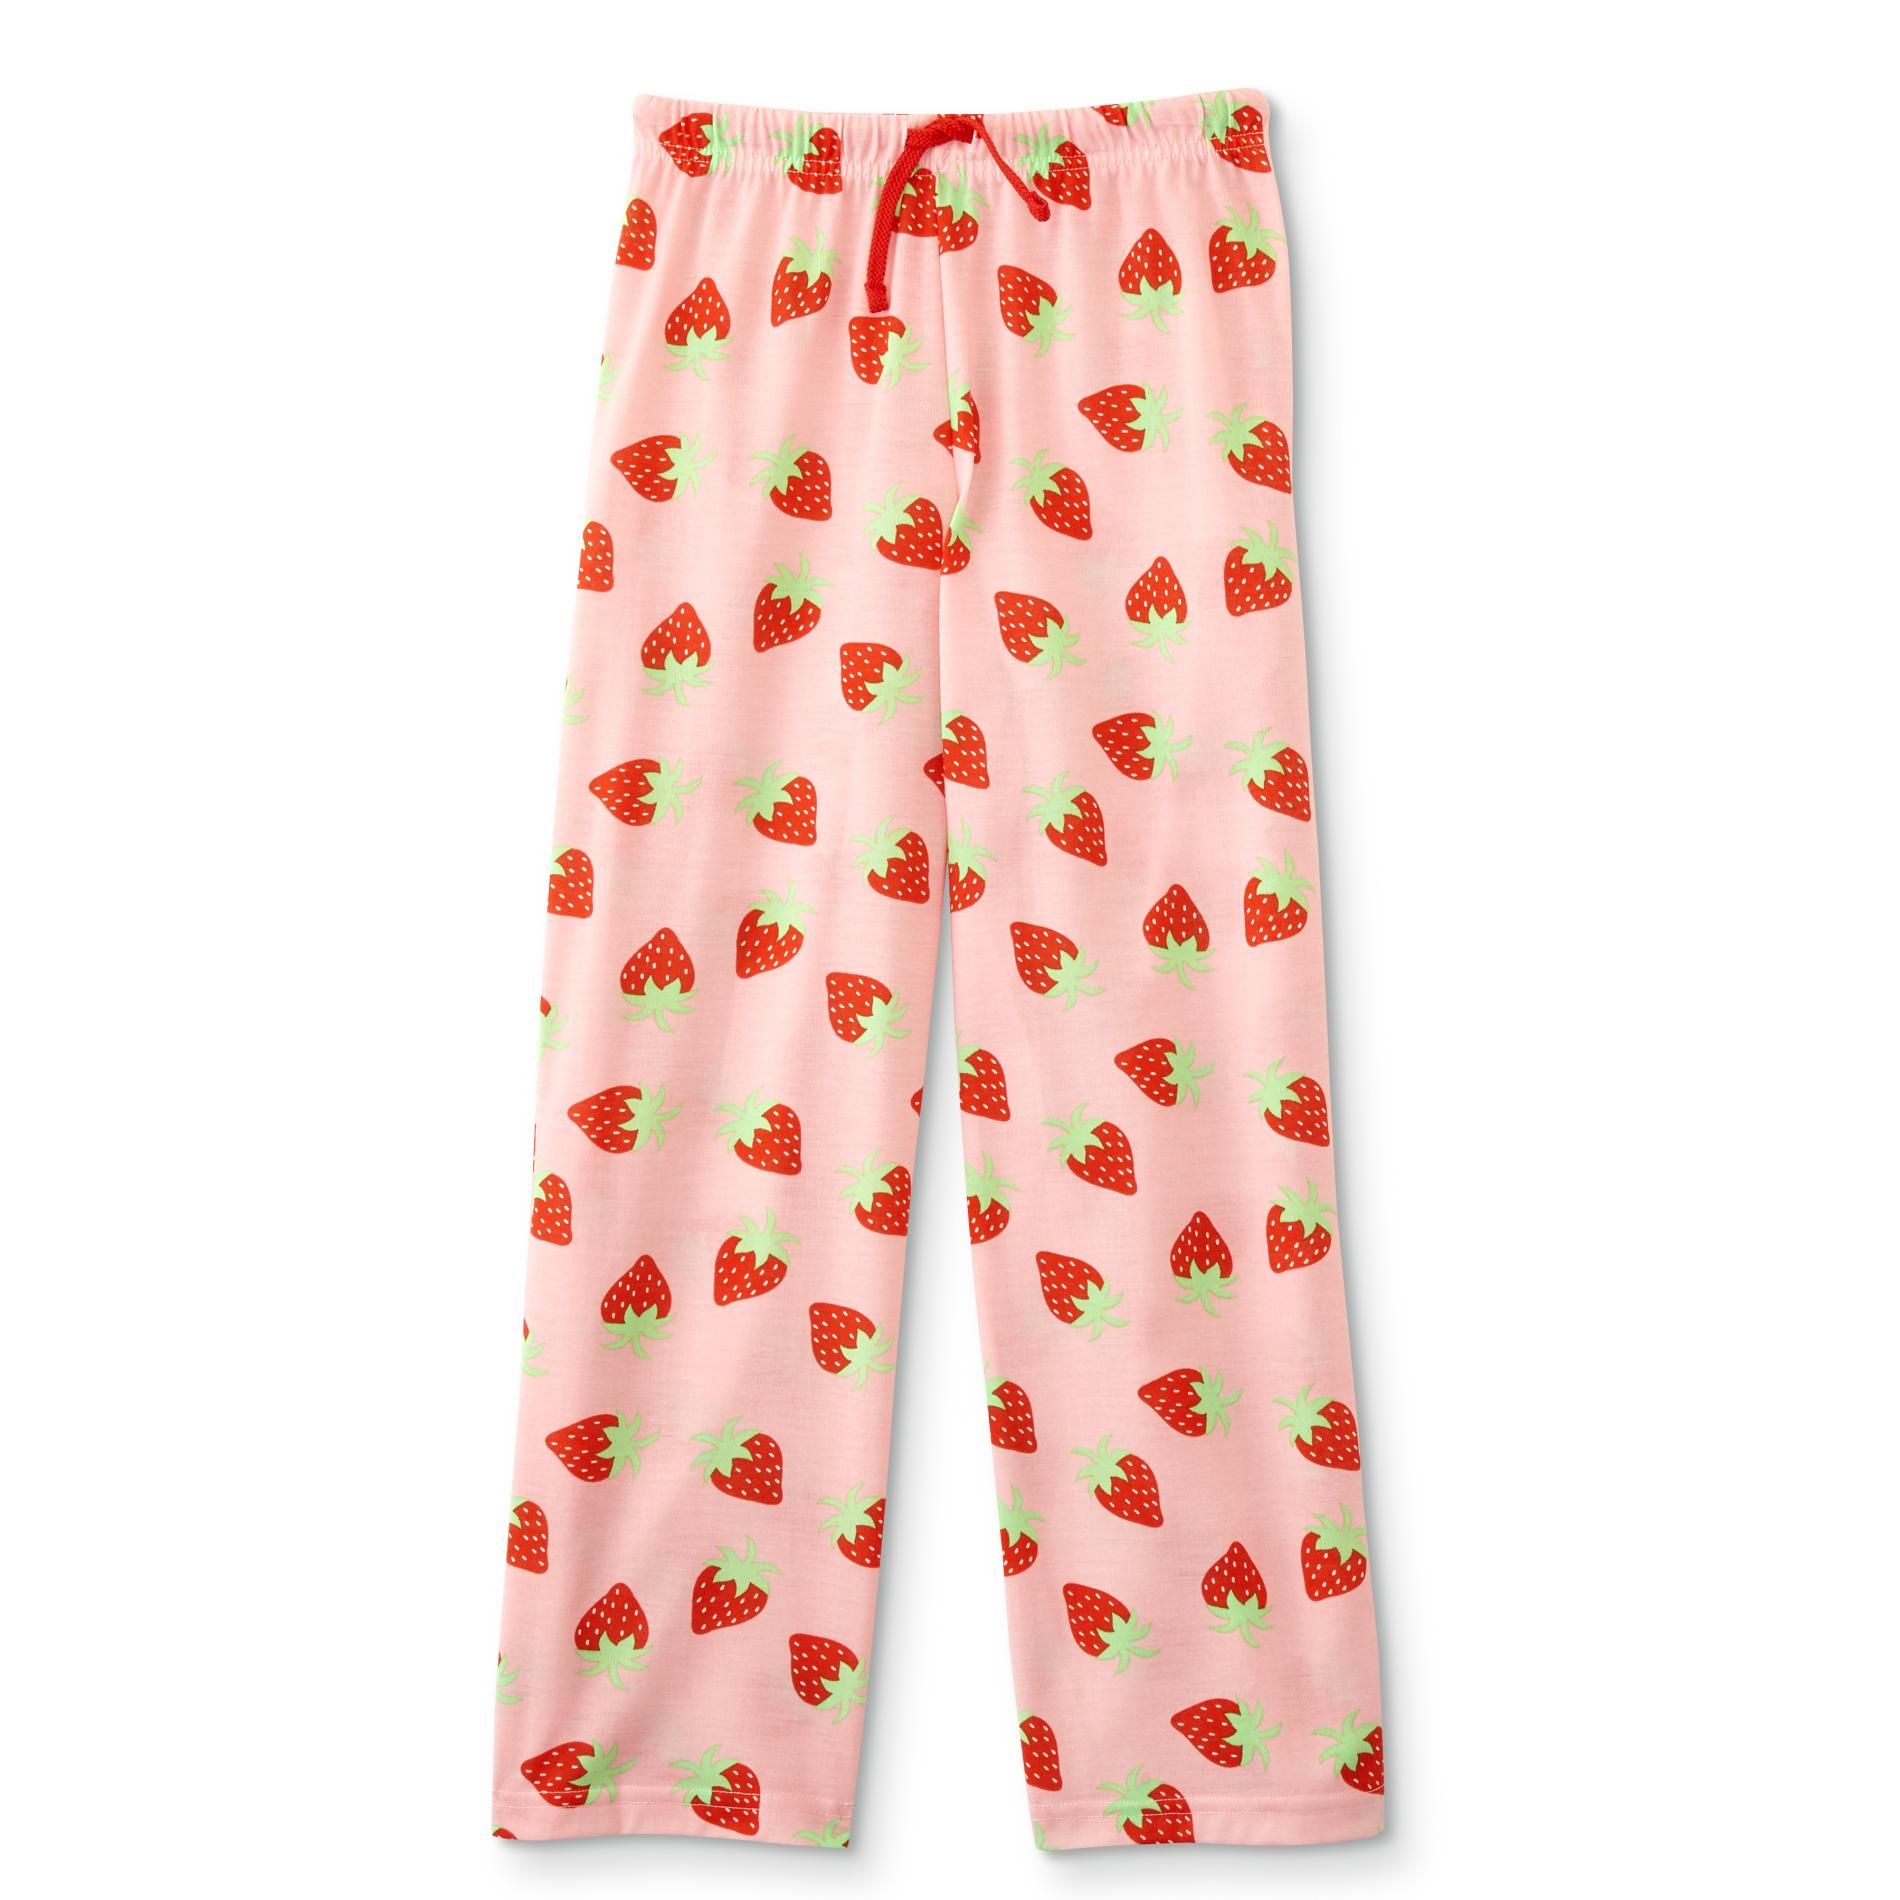 Basic Editions Girls' Pajama Pants - Strawberries